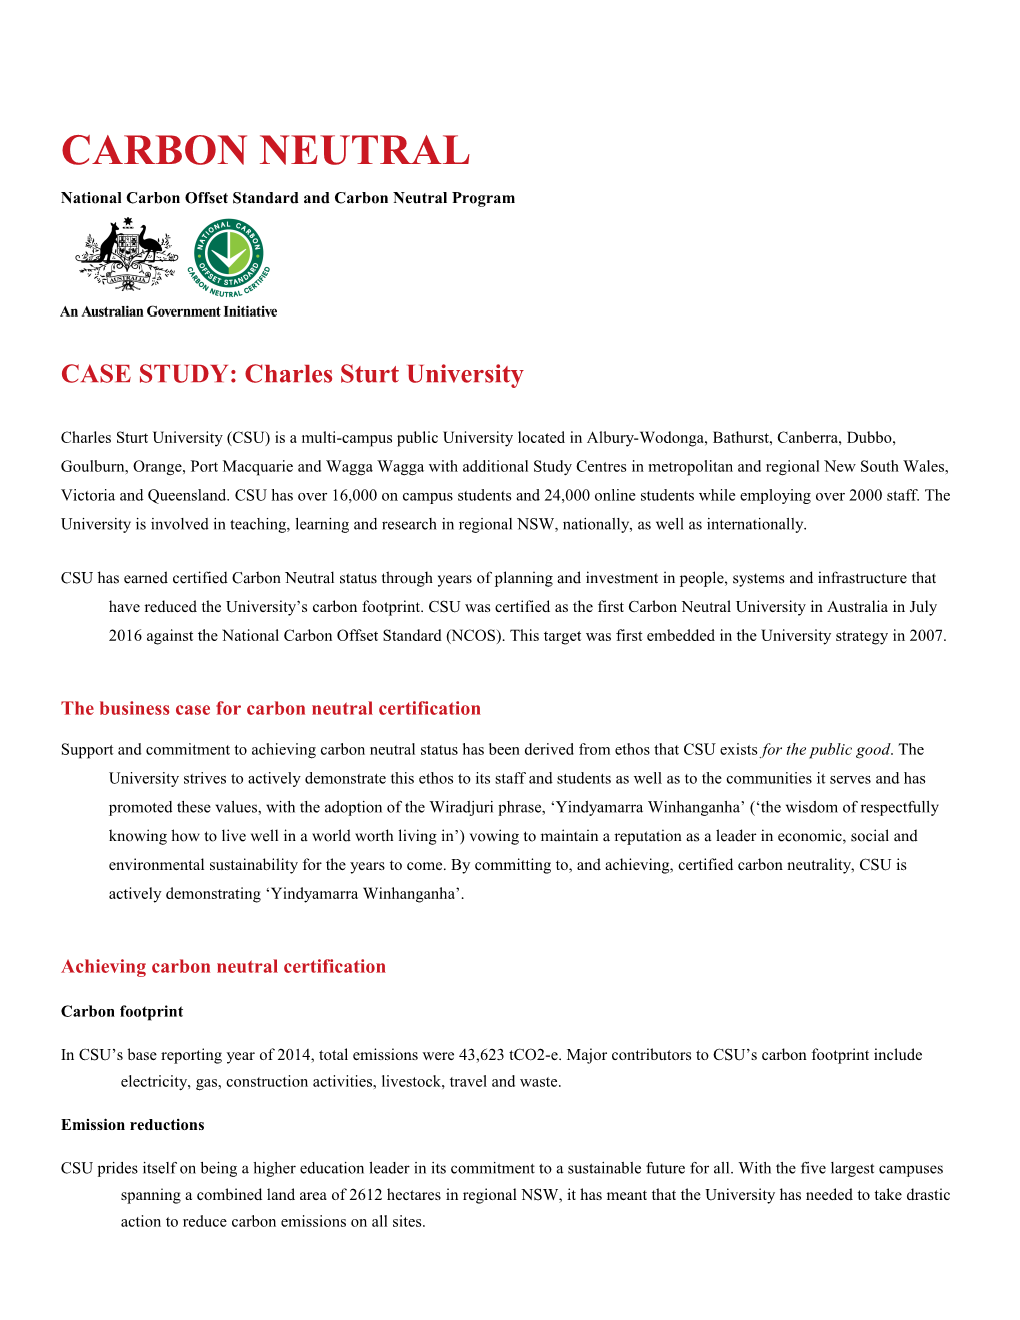 Carbon Neutral Stories - Charles Sturt University